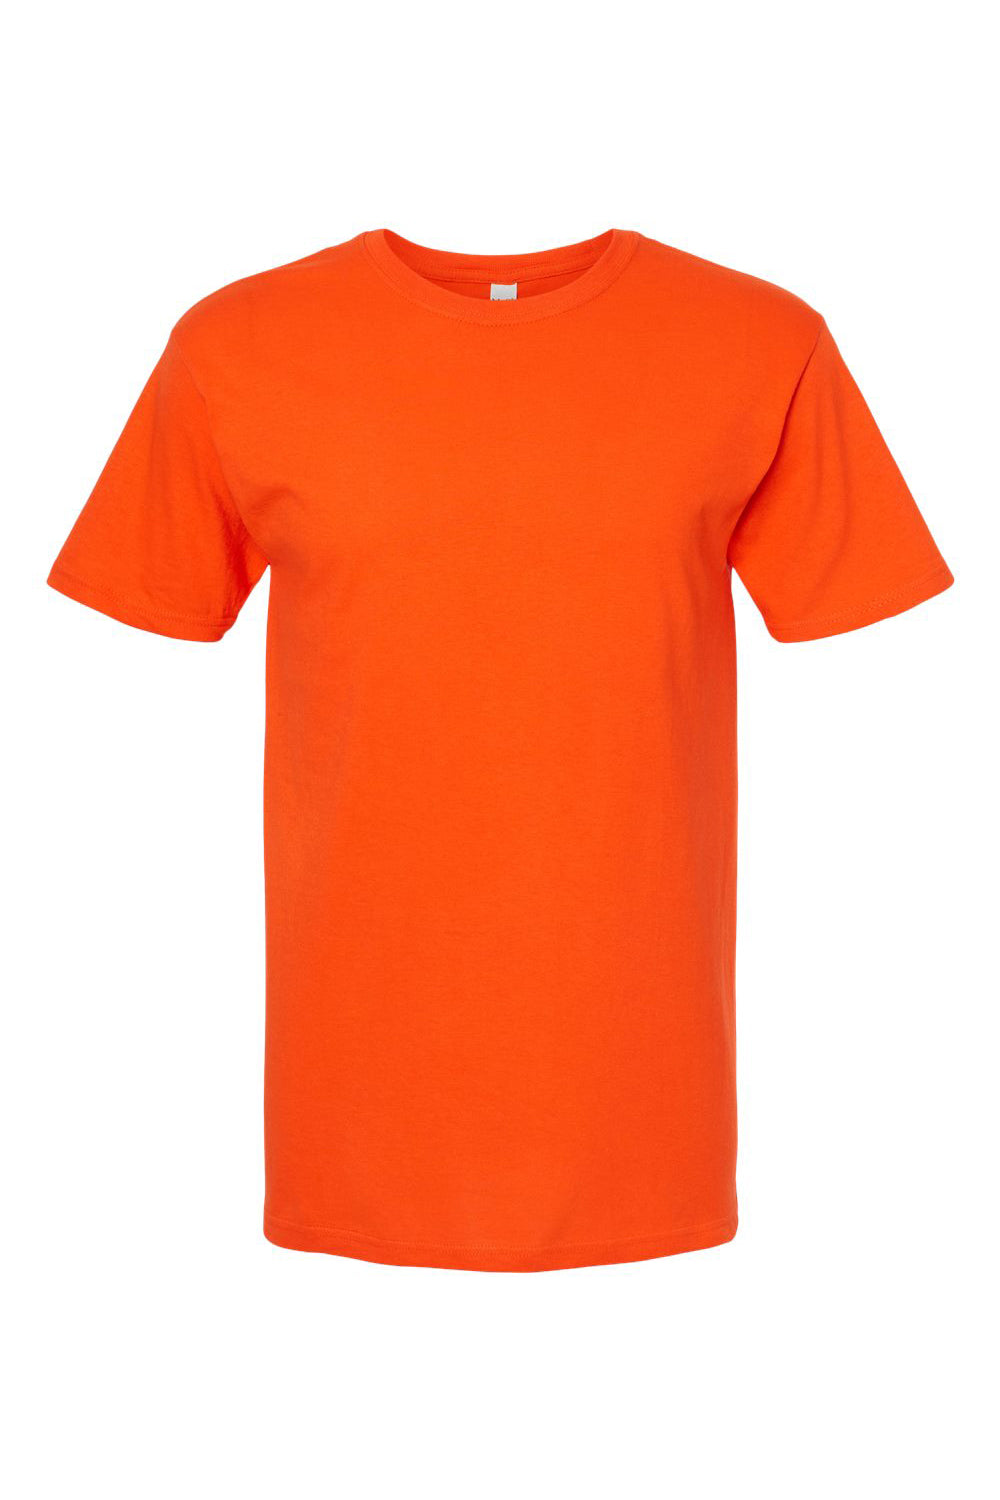 M&O 4800 Mens Gold Soft Touch Short Sleeve Crewneck T-Shirt Orange Flat Front